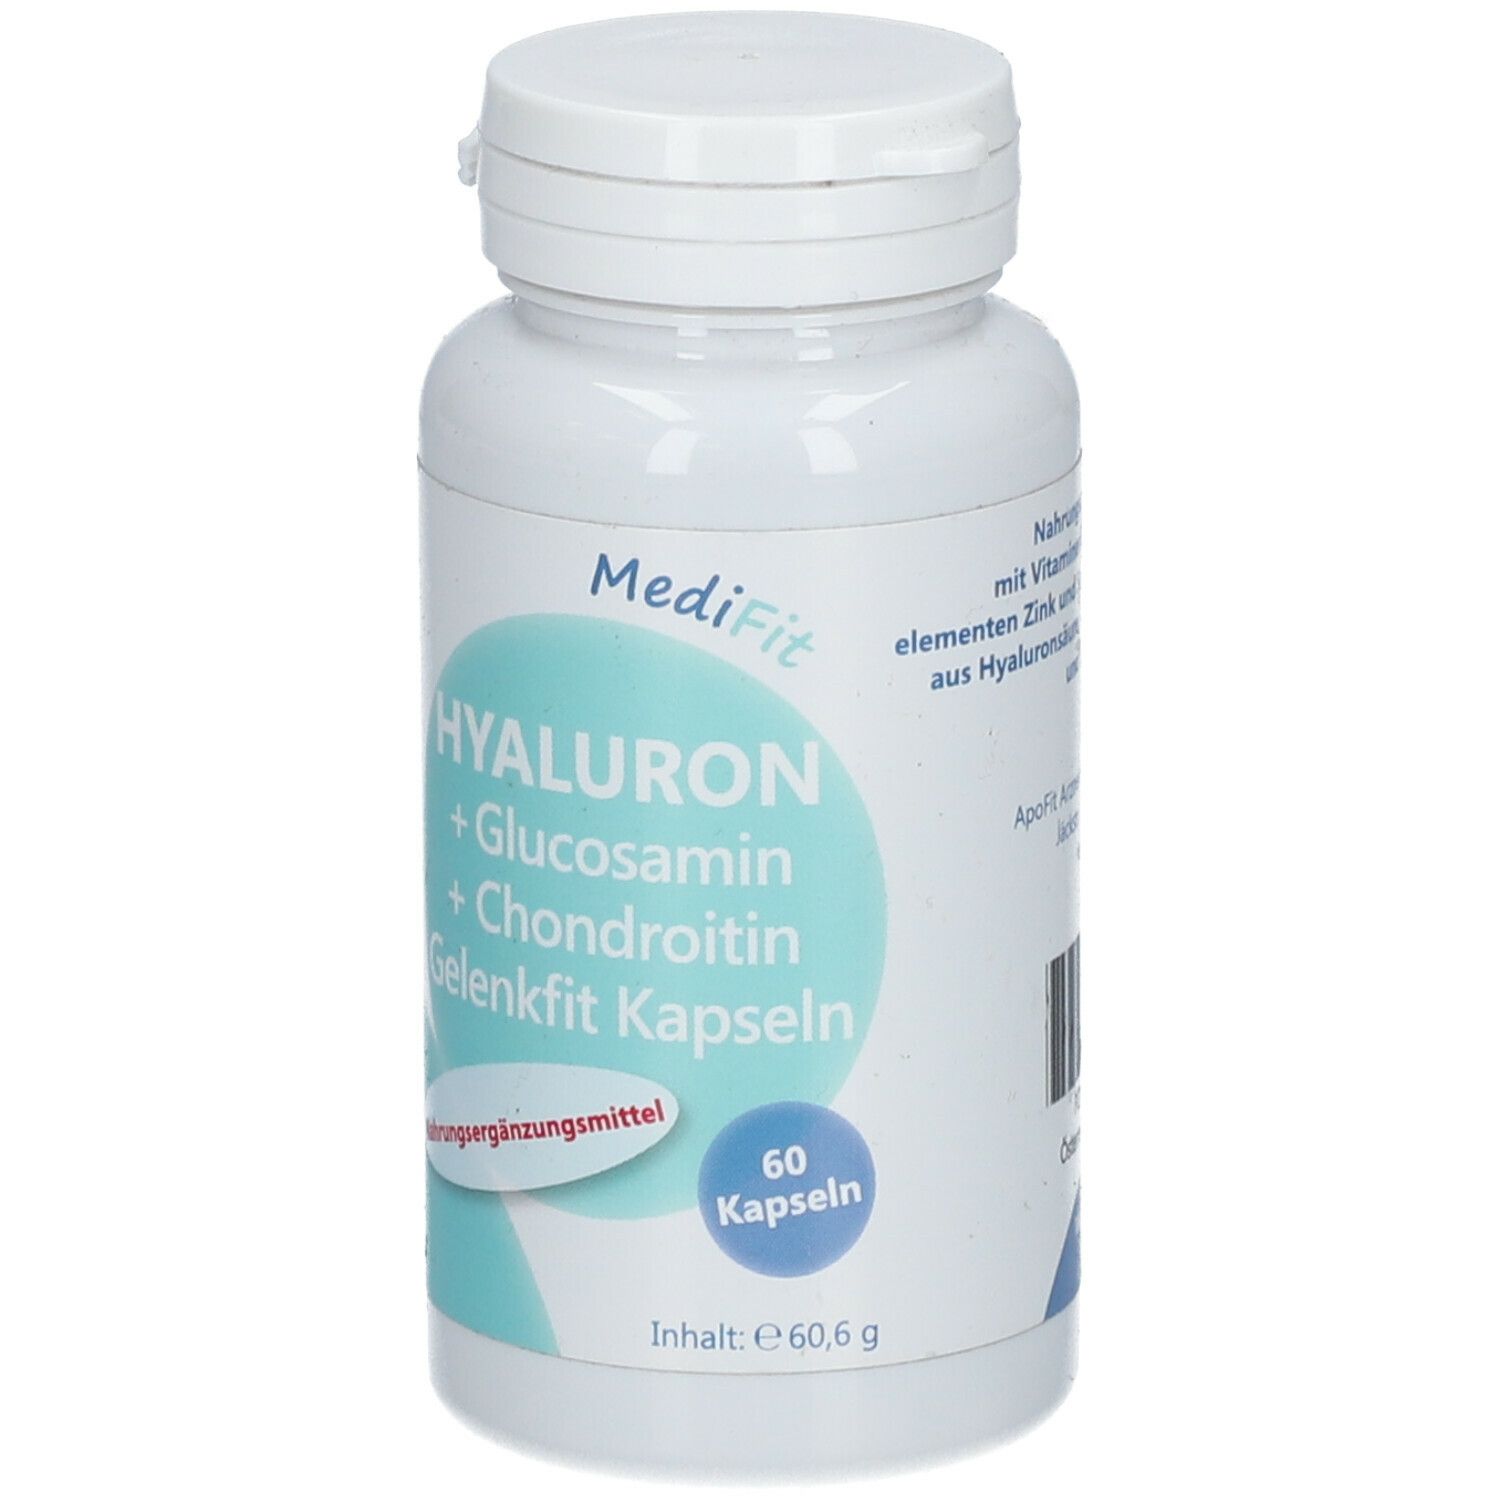 MediFit Hyaluron + Glucosamin + Chondroitin Gelenkfit